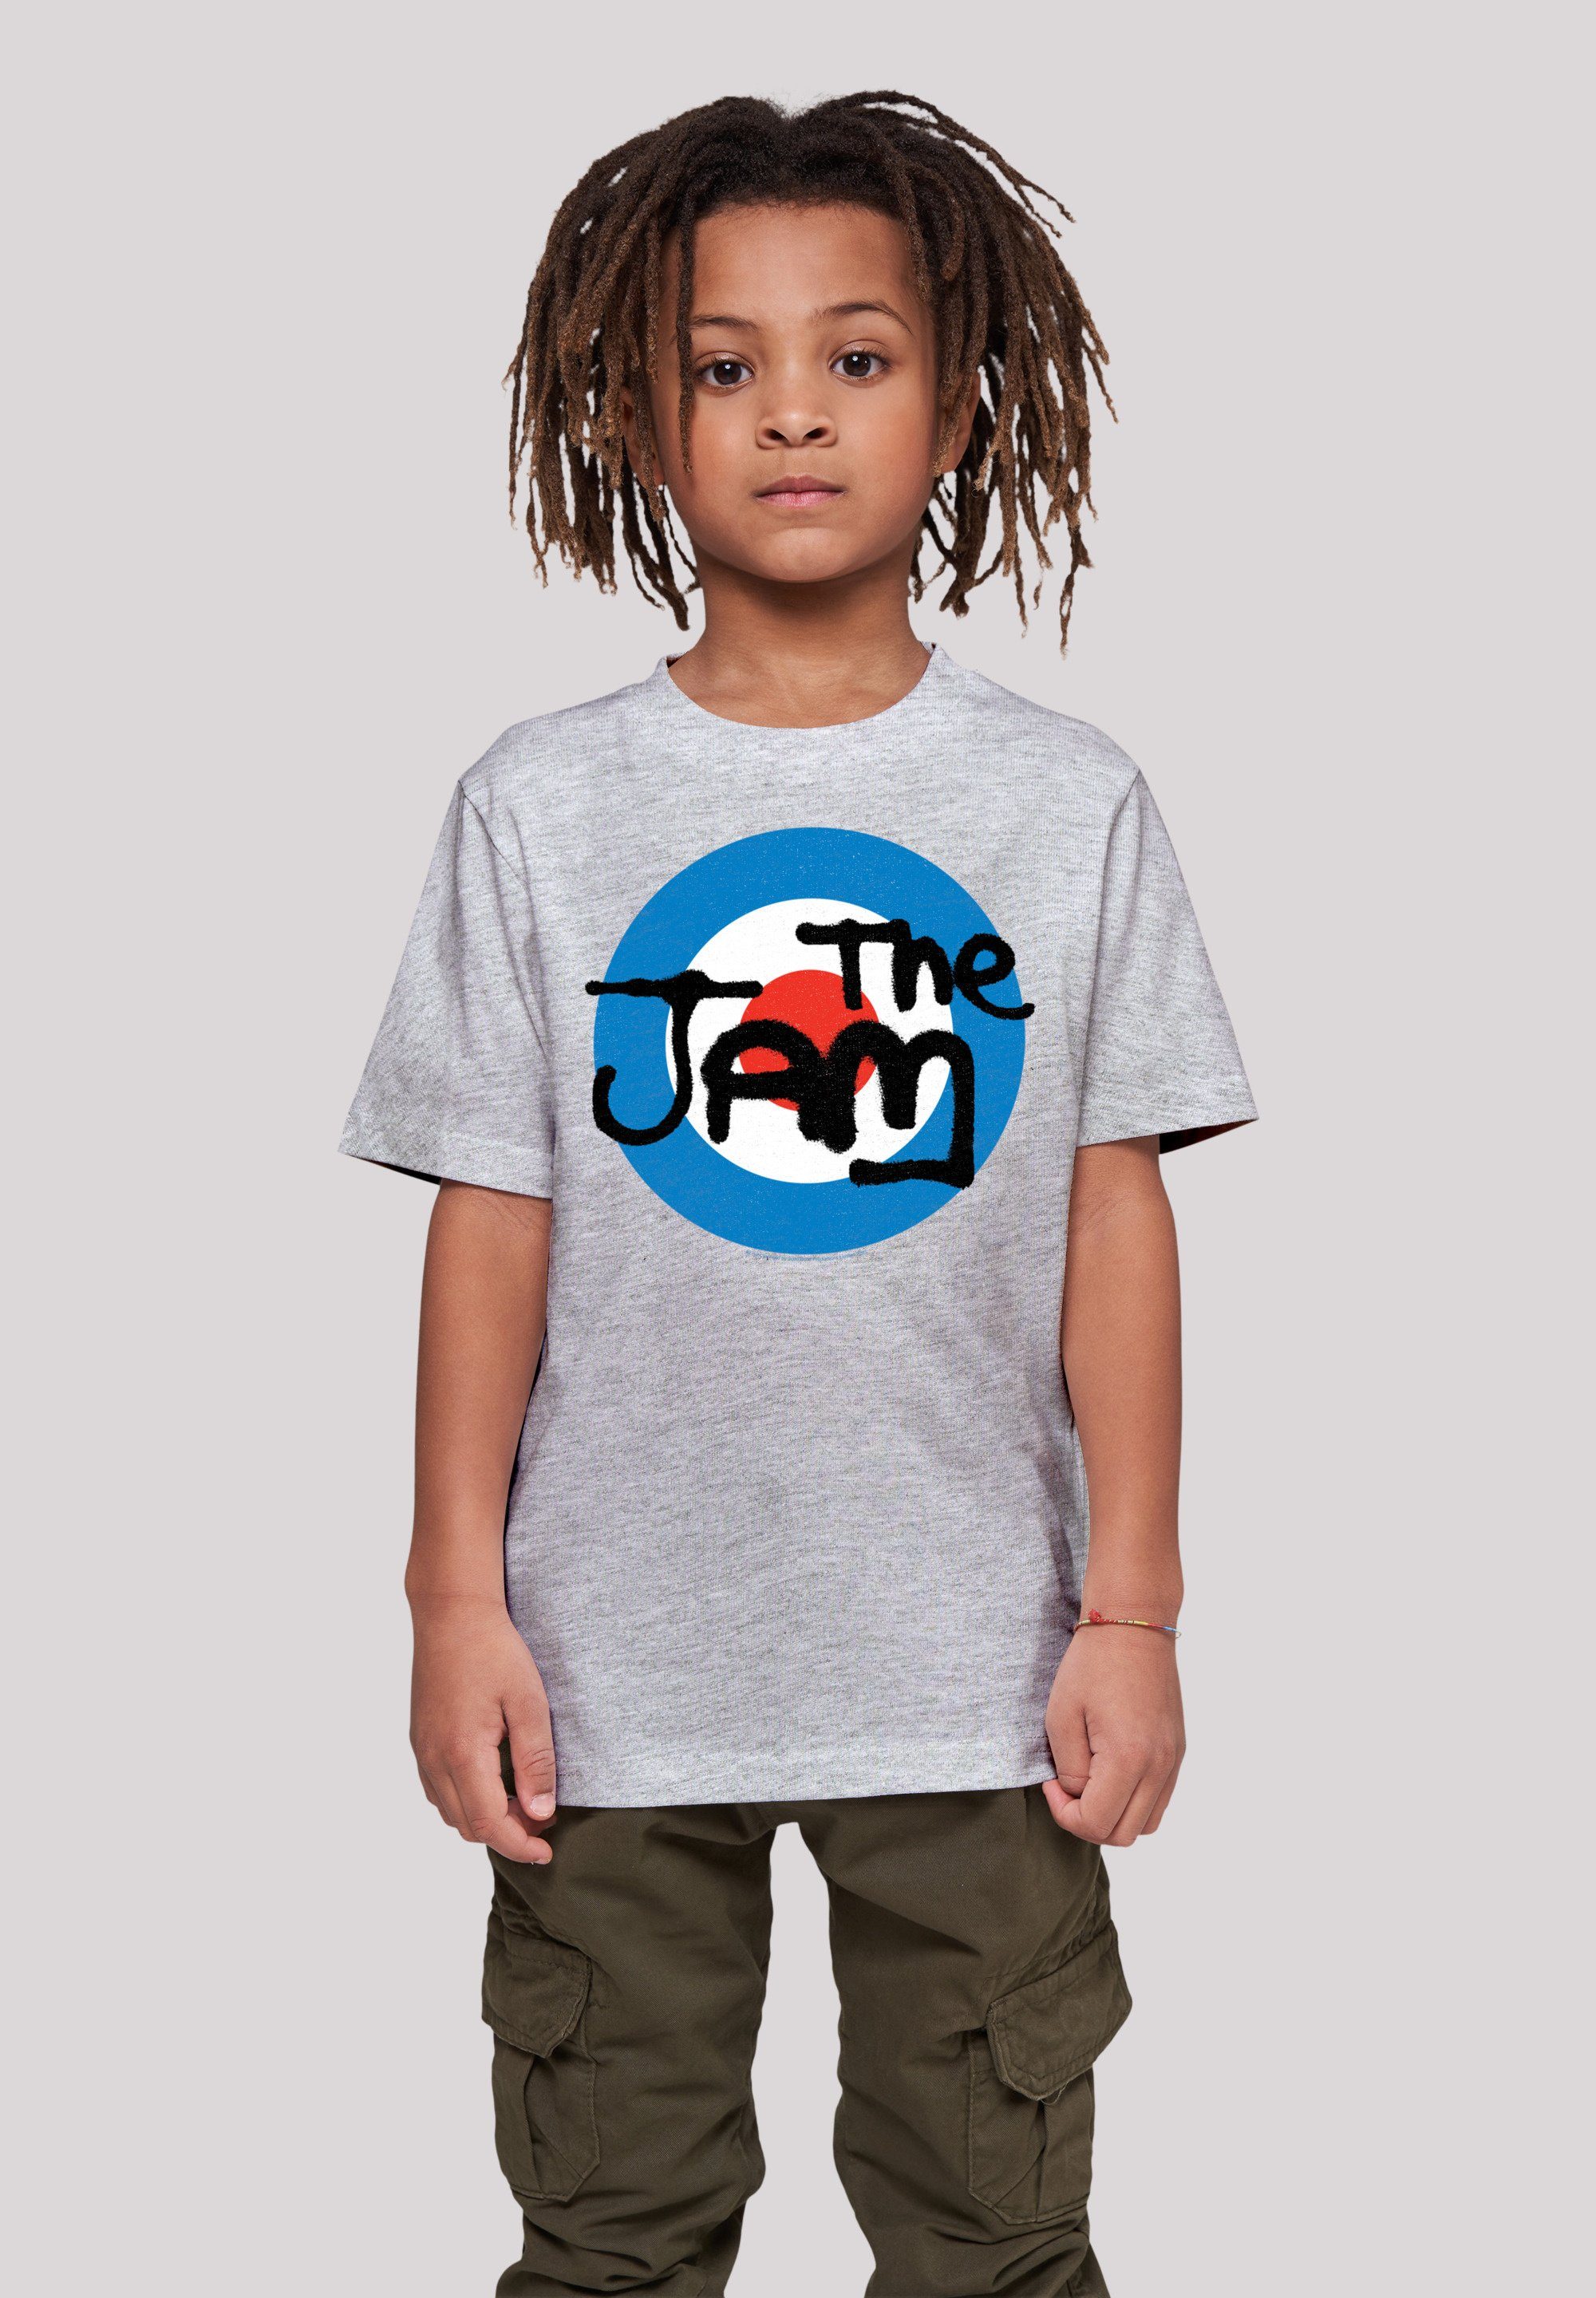 F4NT4STIC T-Shirt The Jam Band Classic Logo Premium Qualität heather grey